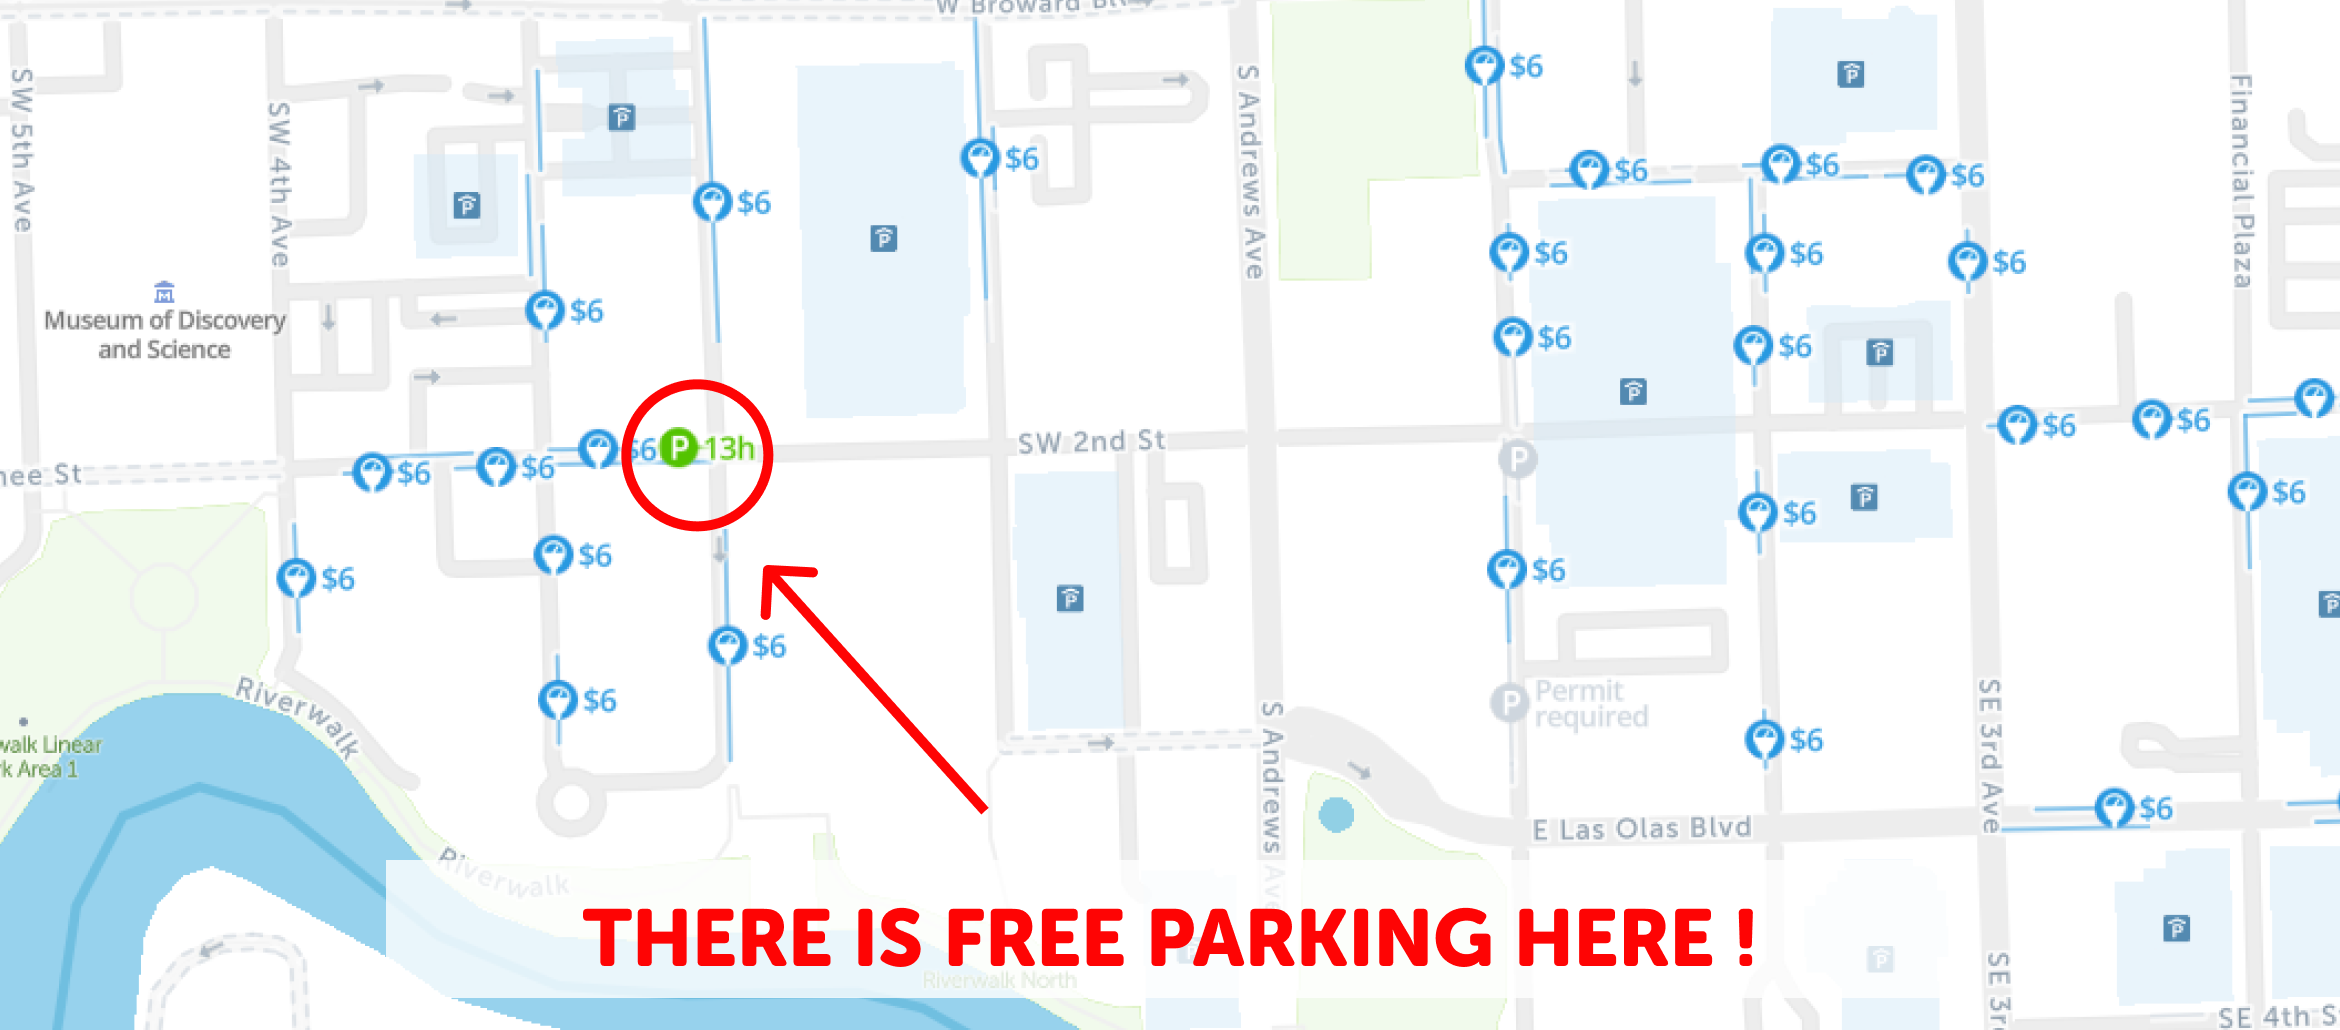 map of free parking in Fort Lauderdale - SpotAngels